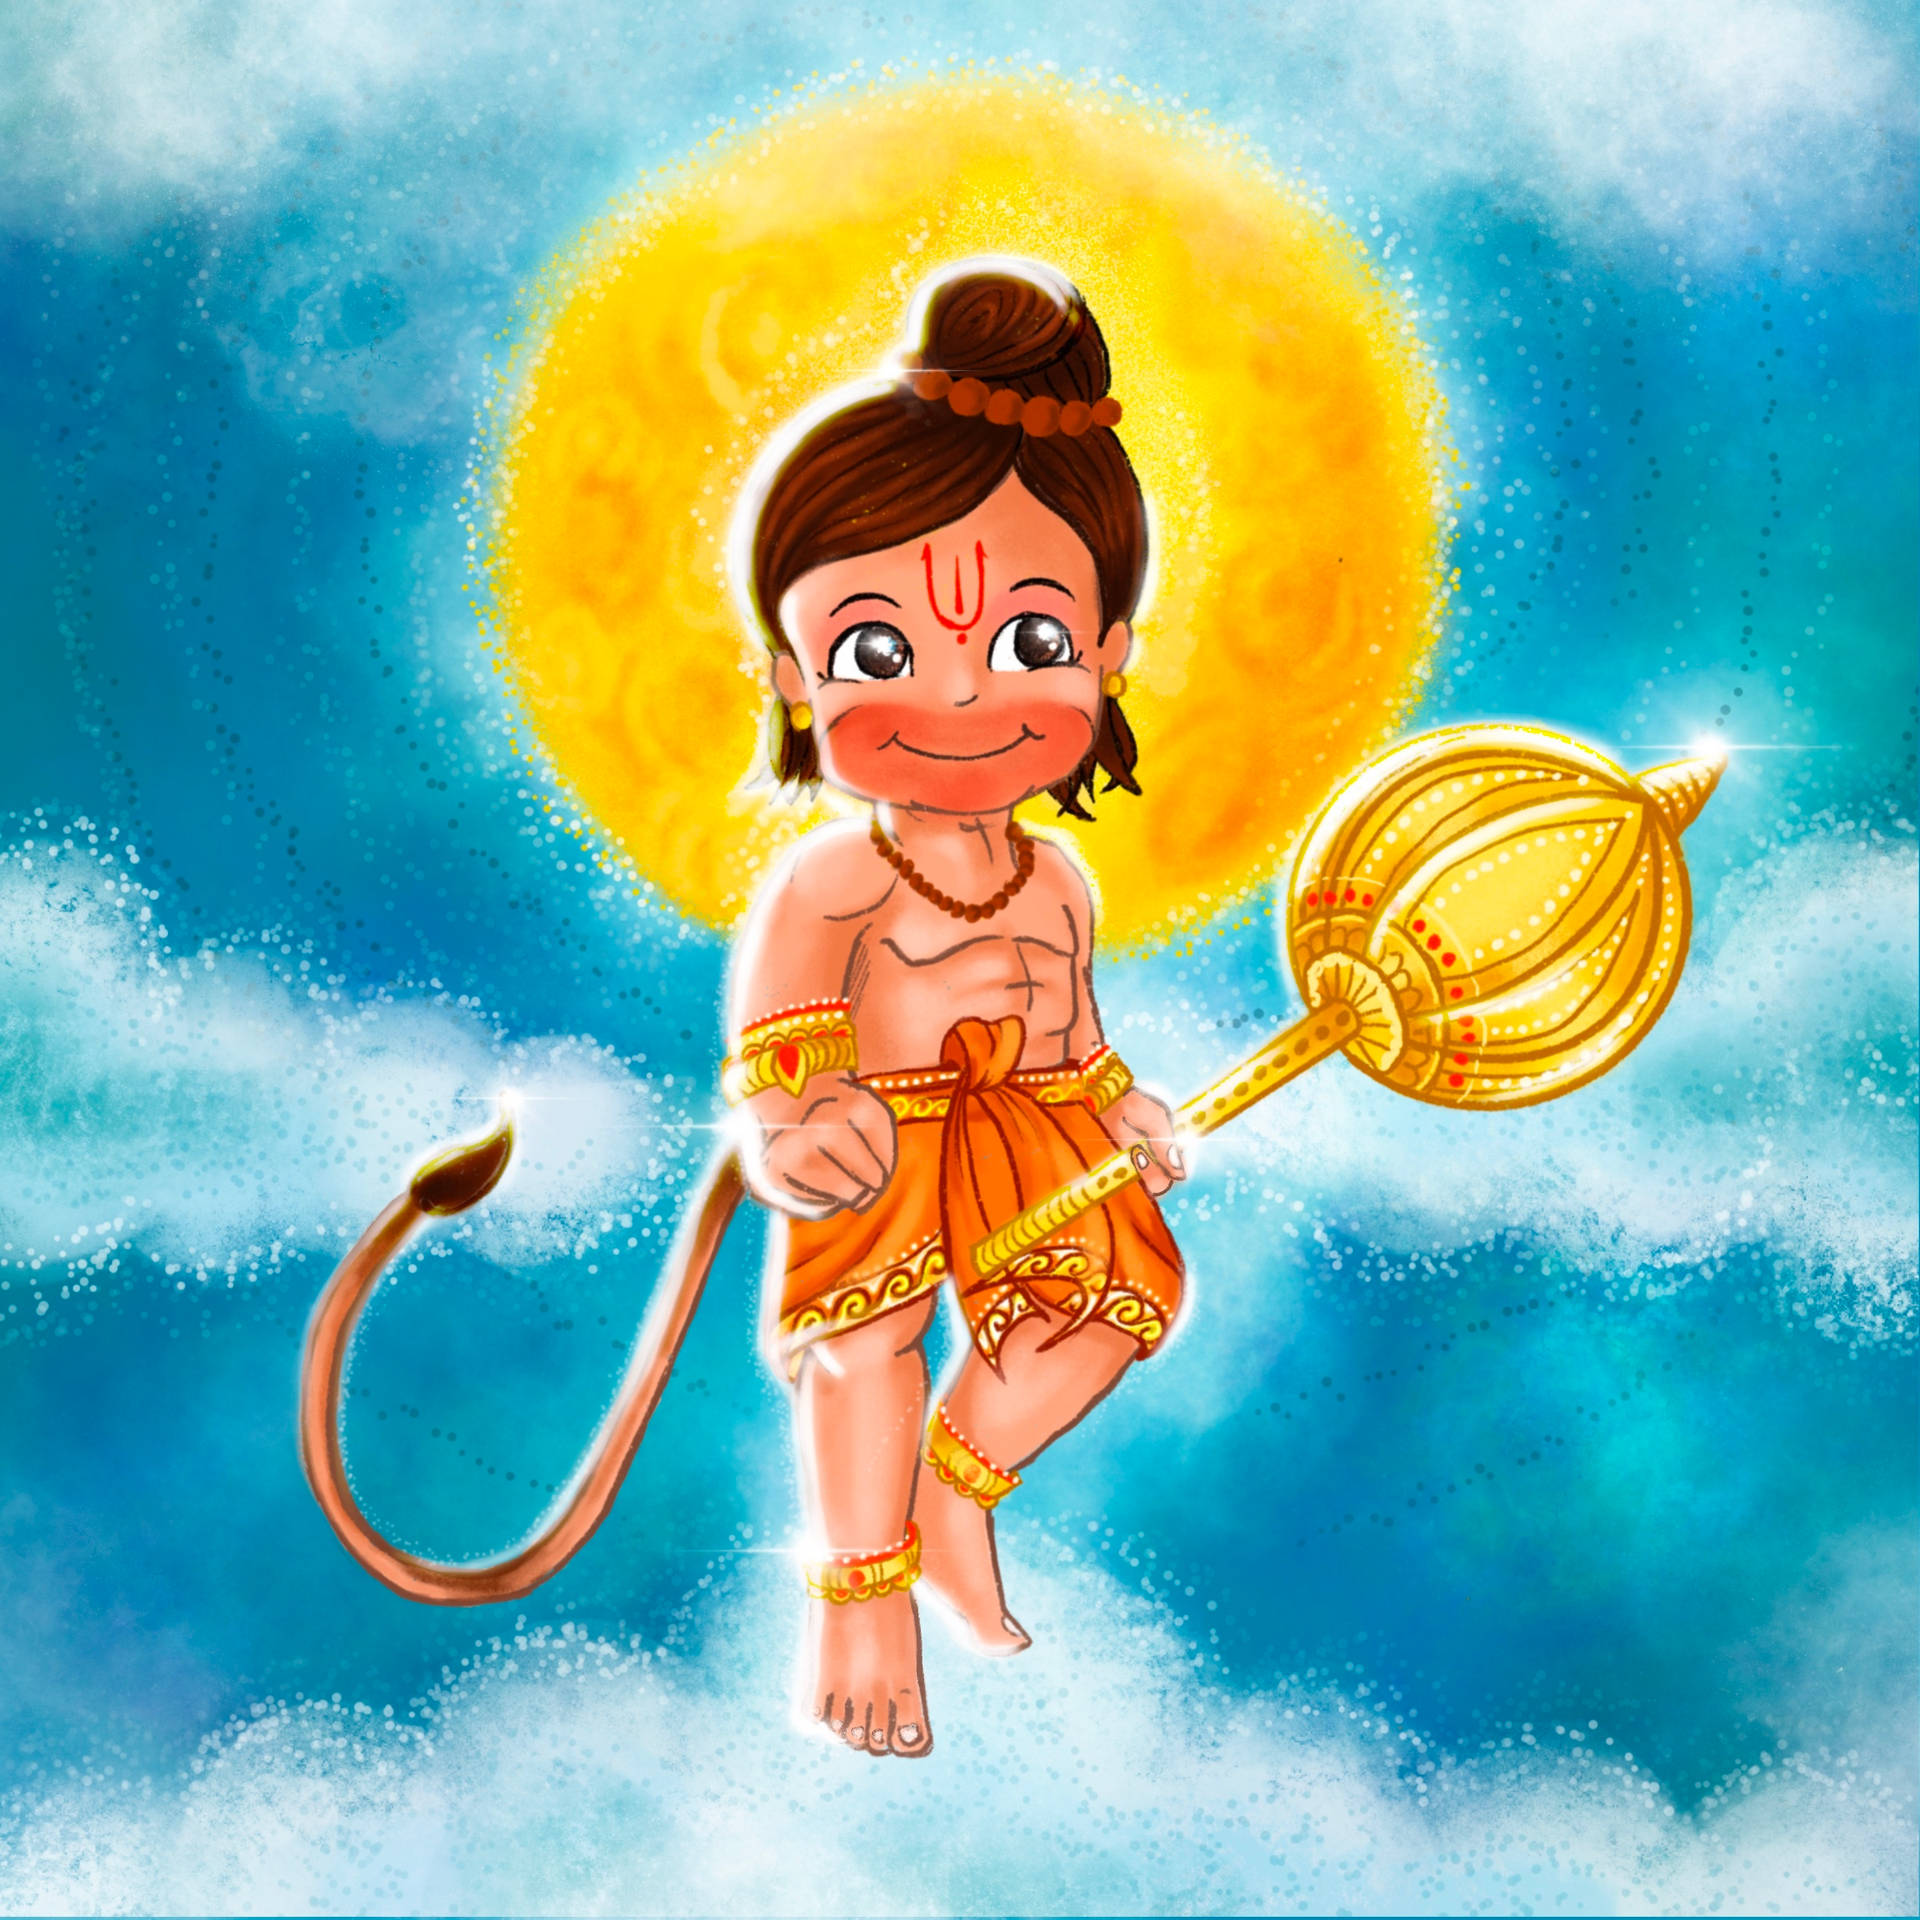 Free Baby Hanuman Wallpaper Downloads, [100+] Baby Hanuman Wallpapers for  FREE 